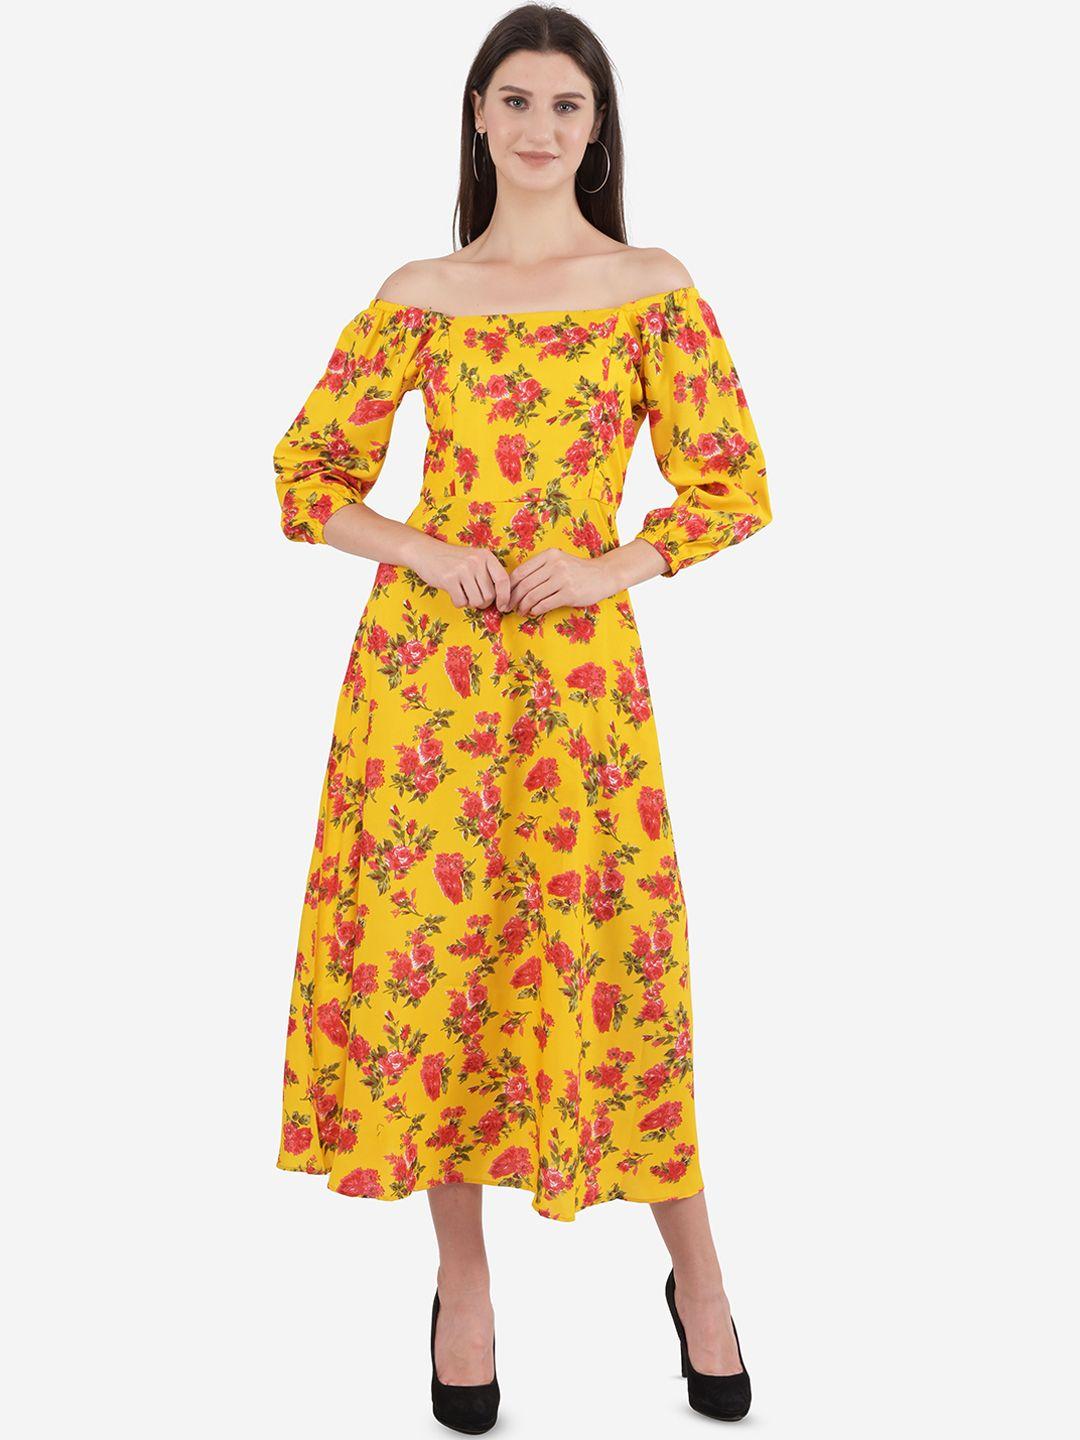 ashnaina yellow floral off-shoulder crepe midi dress